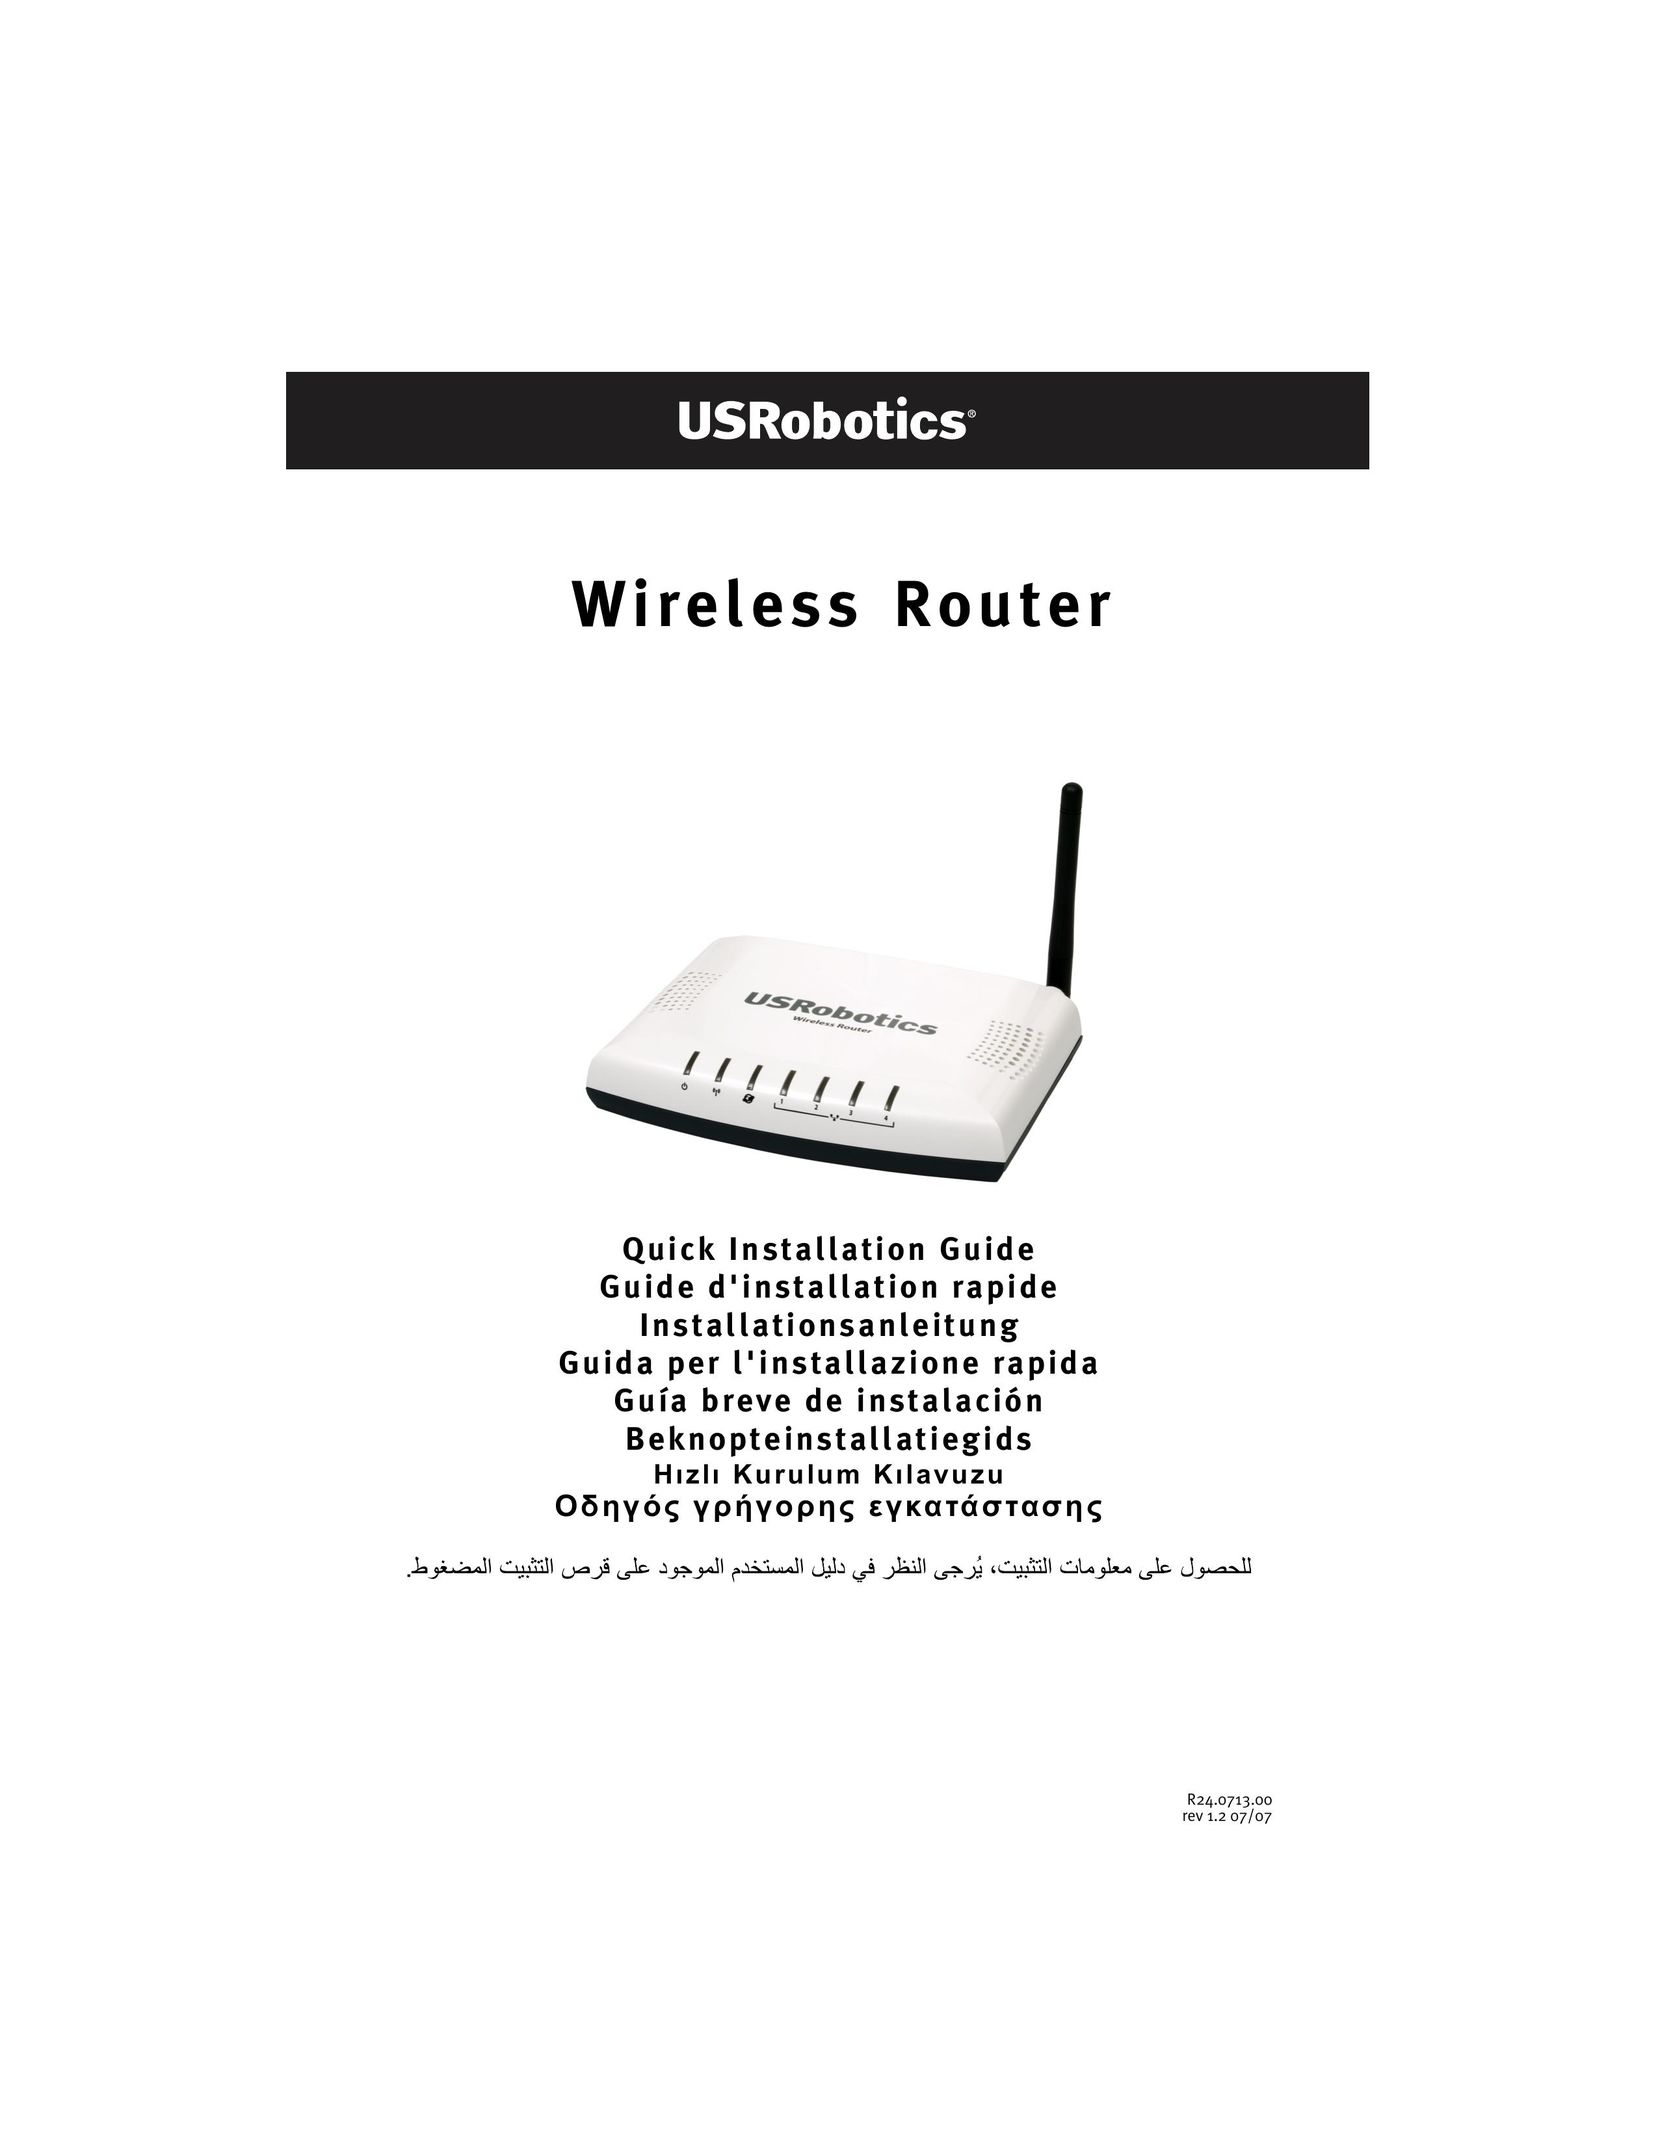 USRobotics 5466 Network Router User Manual